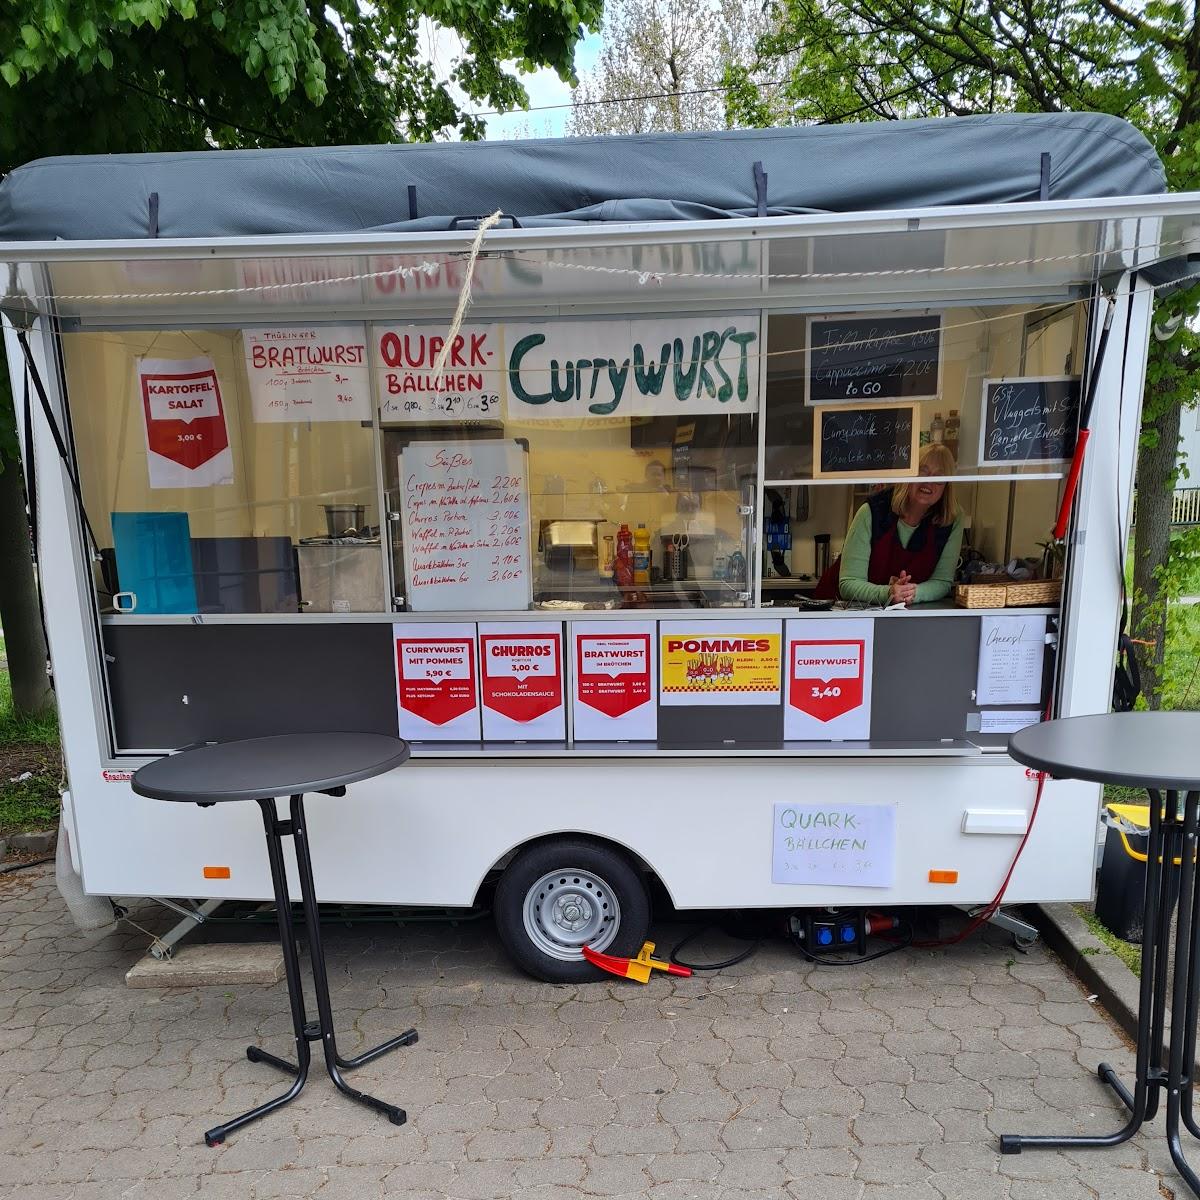 Restaurant "Curryimbiss" in Berlin